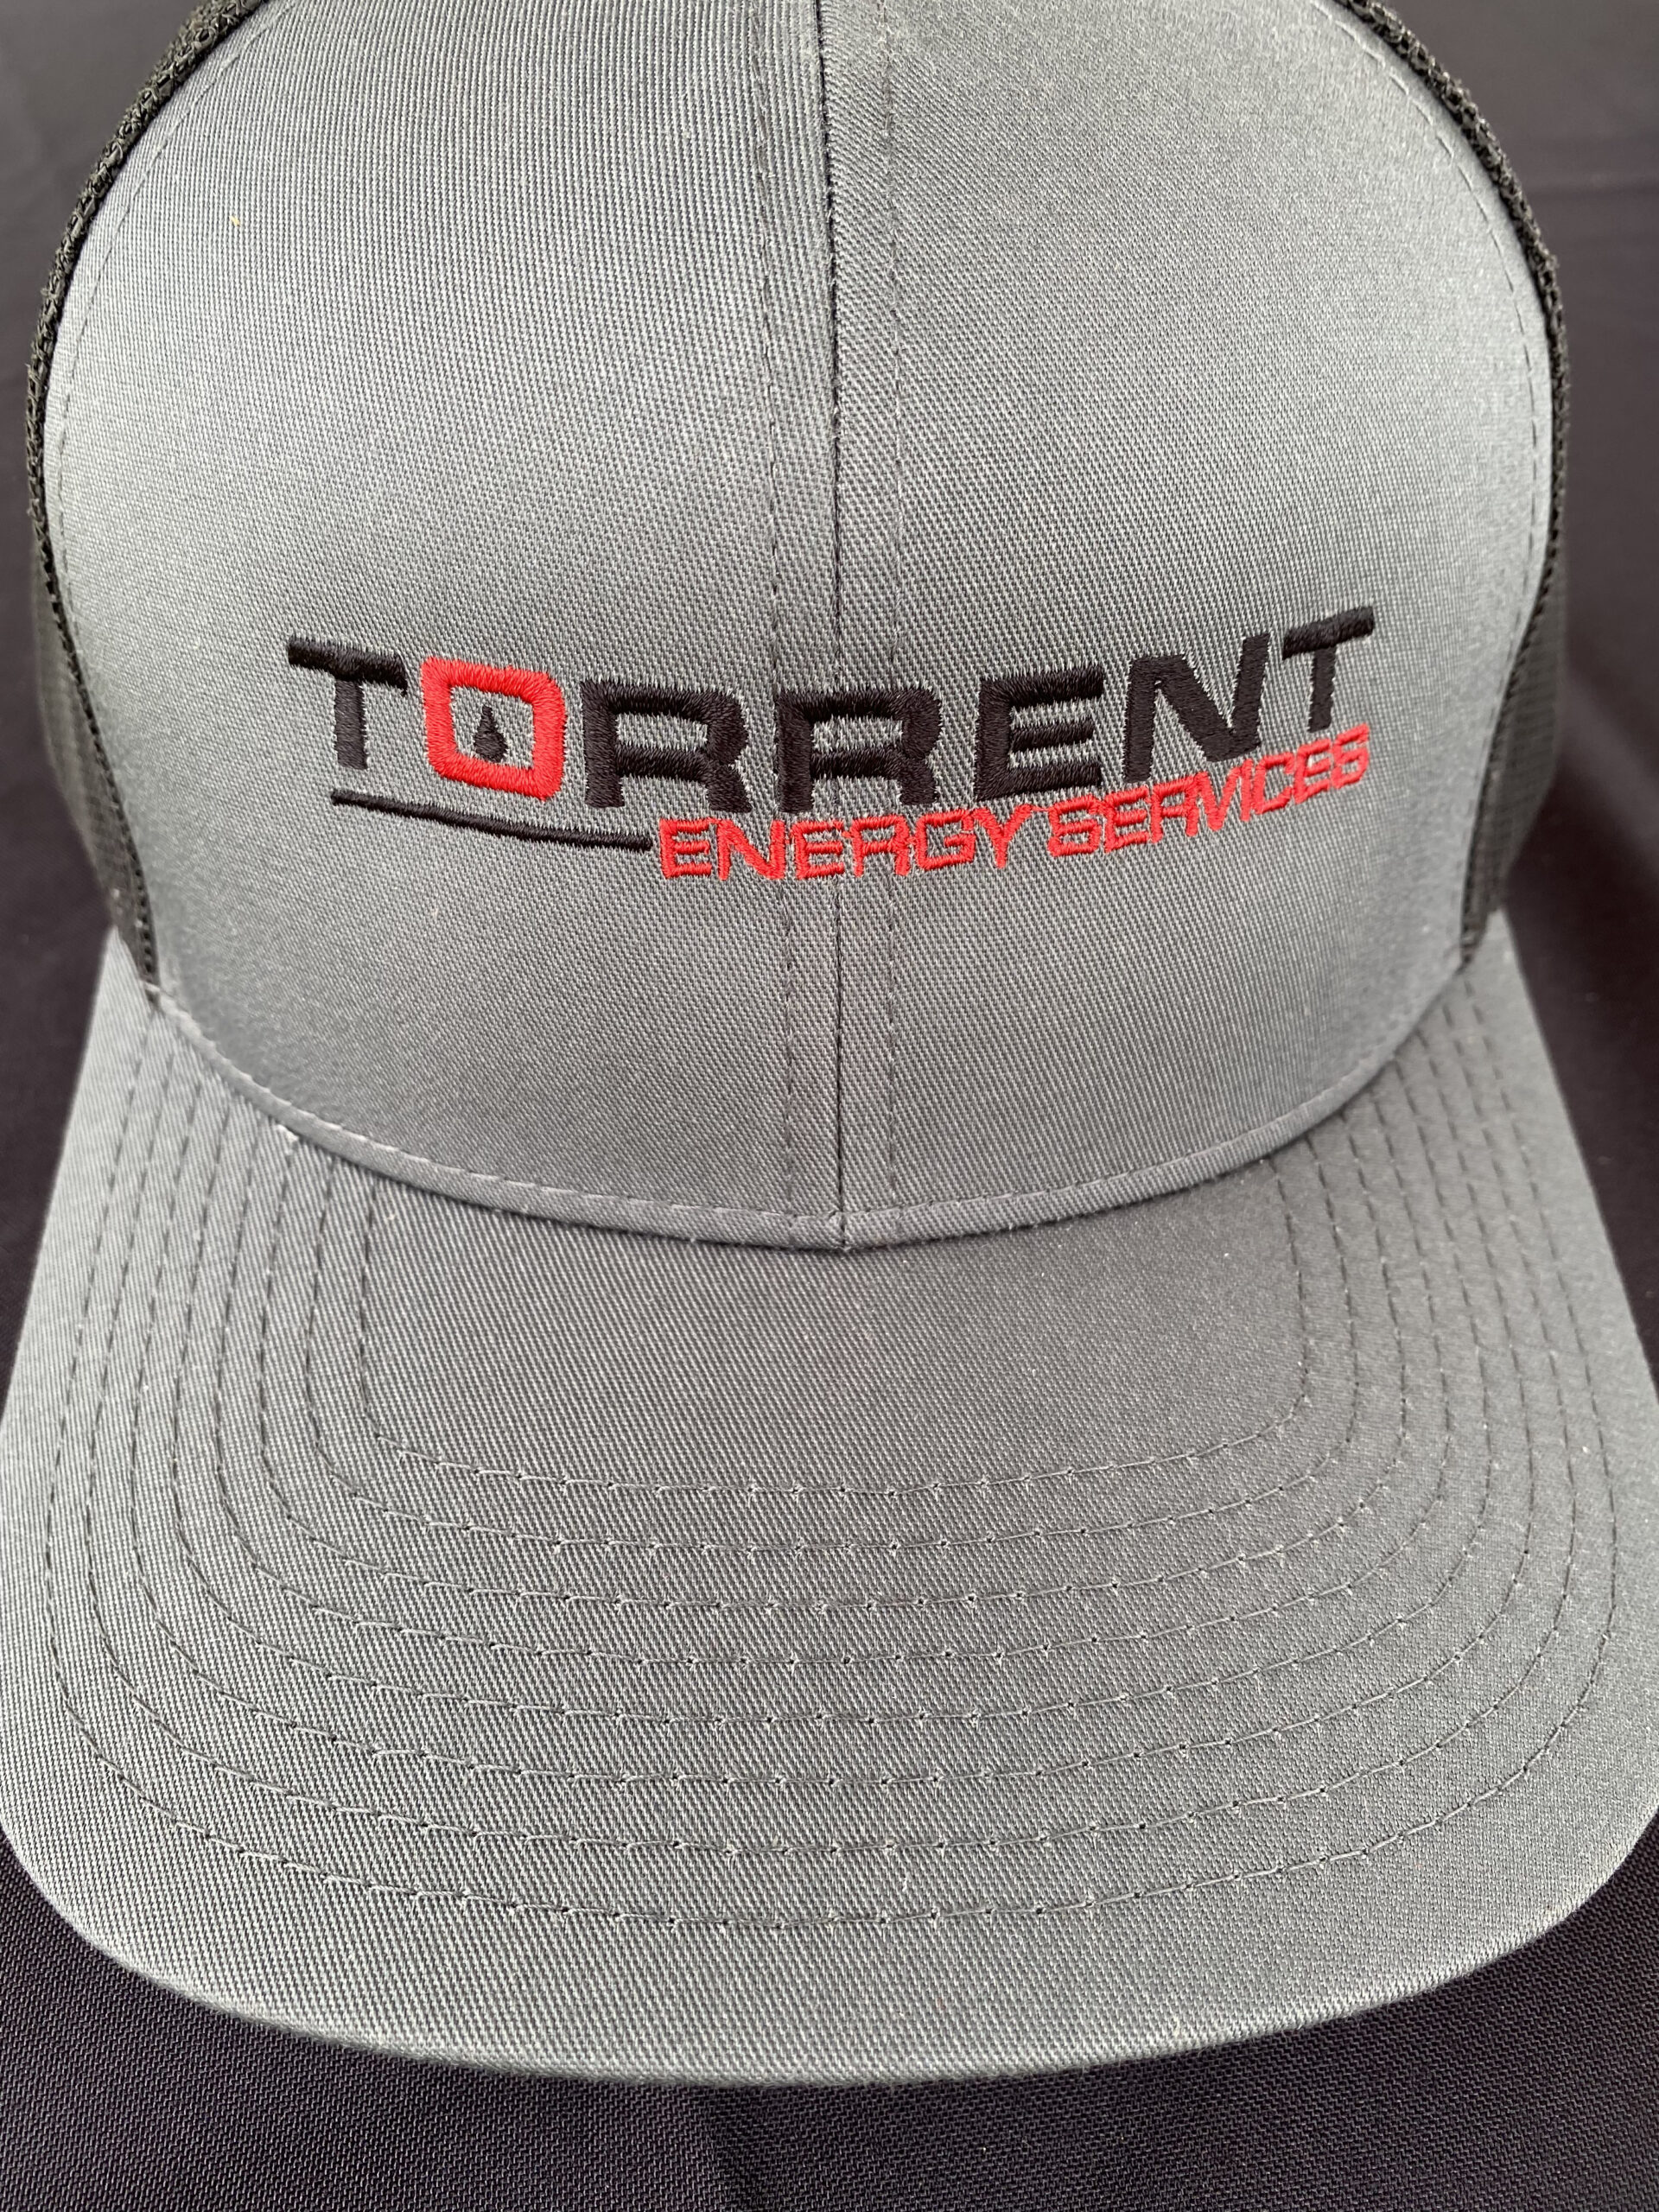 Torrent and Ranger sponsor COP Golf Tournament